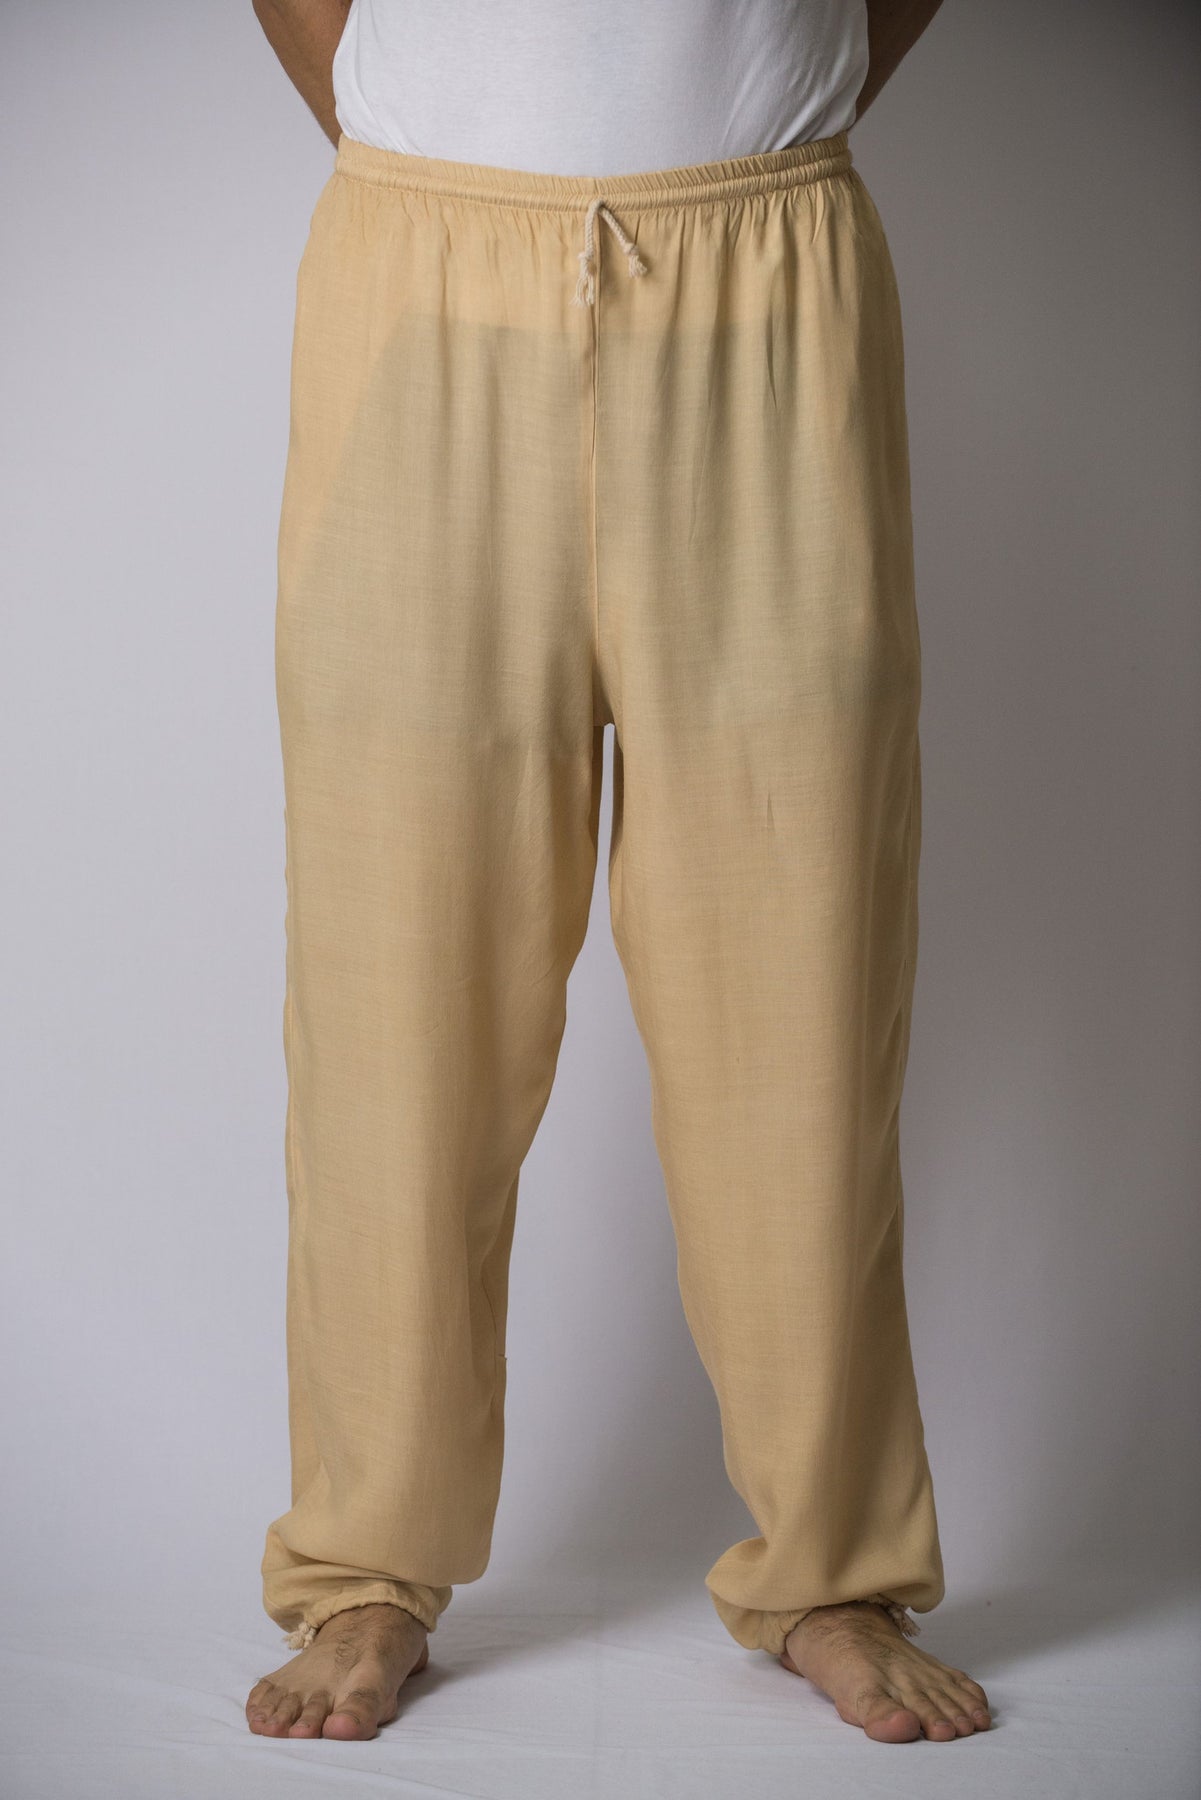 Solid Color Drawstring Men's Yoga Massage Pants in Cream – Harem Pants